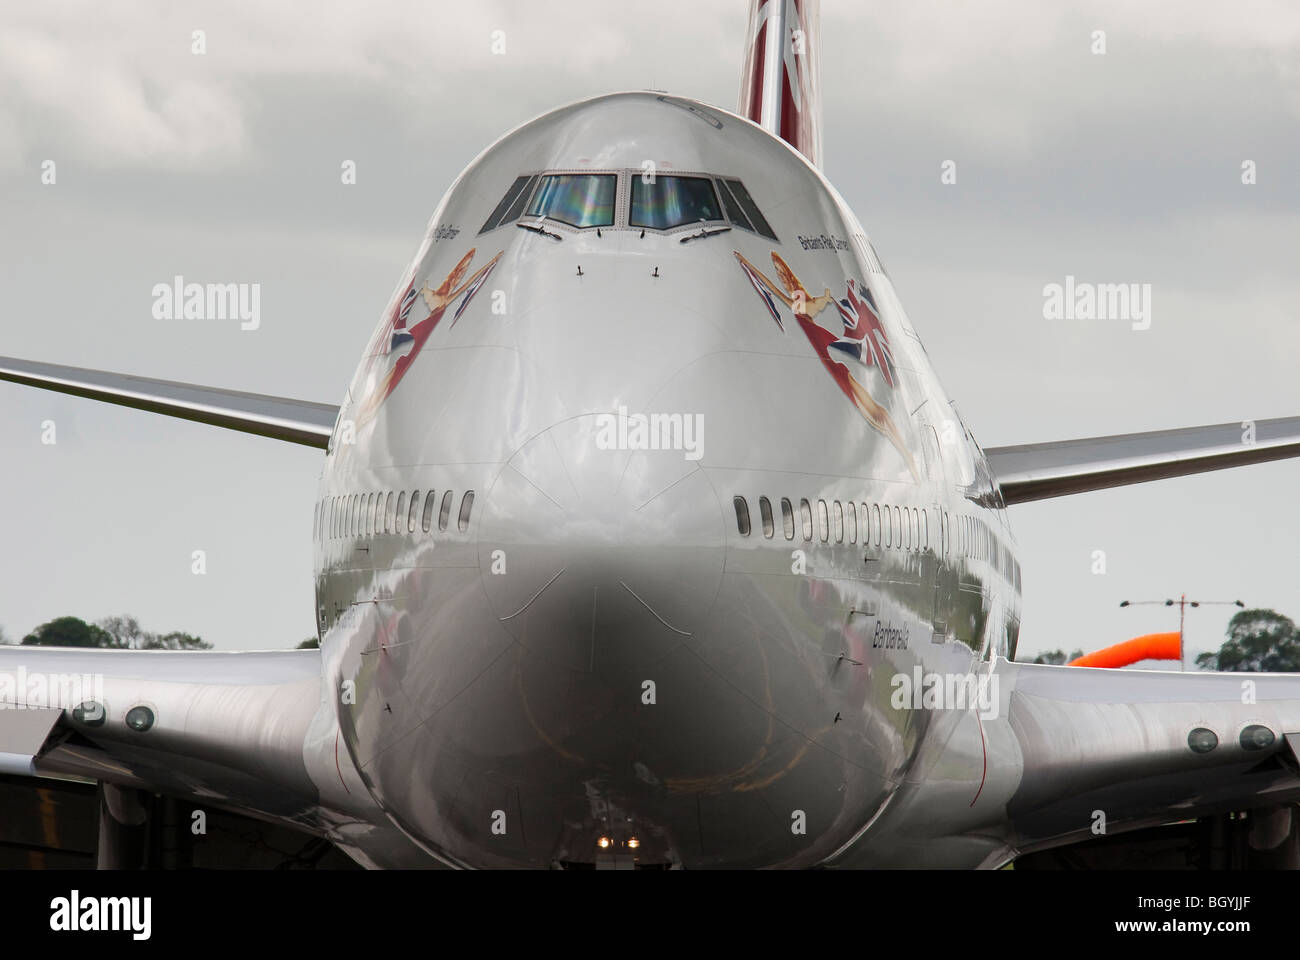 Virgin Atlantic Boeing 747-400 jumbo jet named Barbarella. Stock Photo